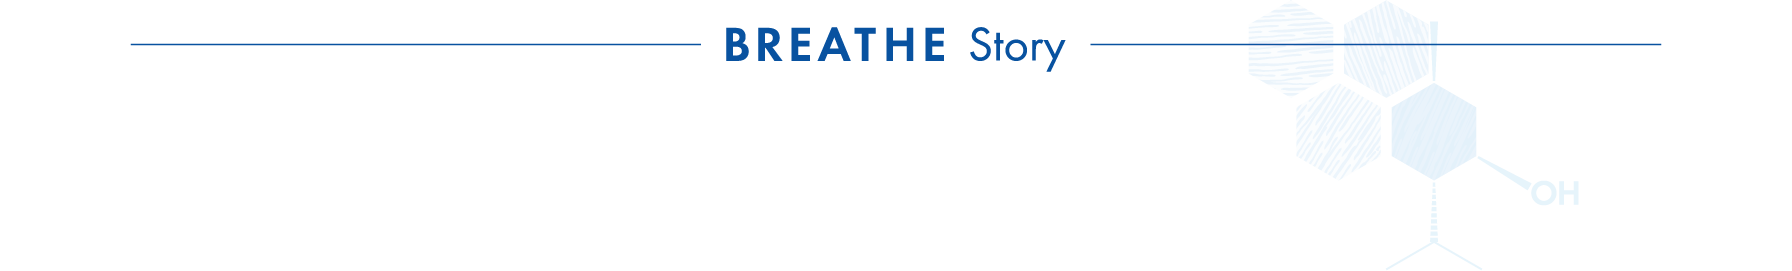 breathe story ブリーズストーリー